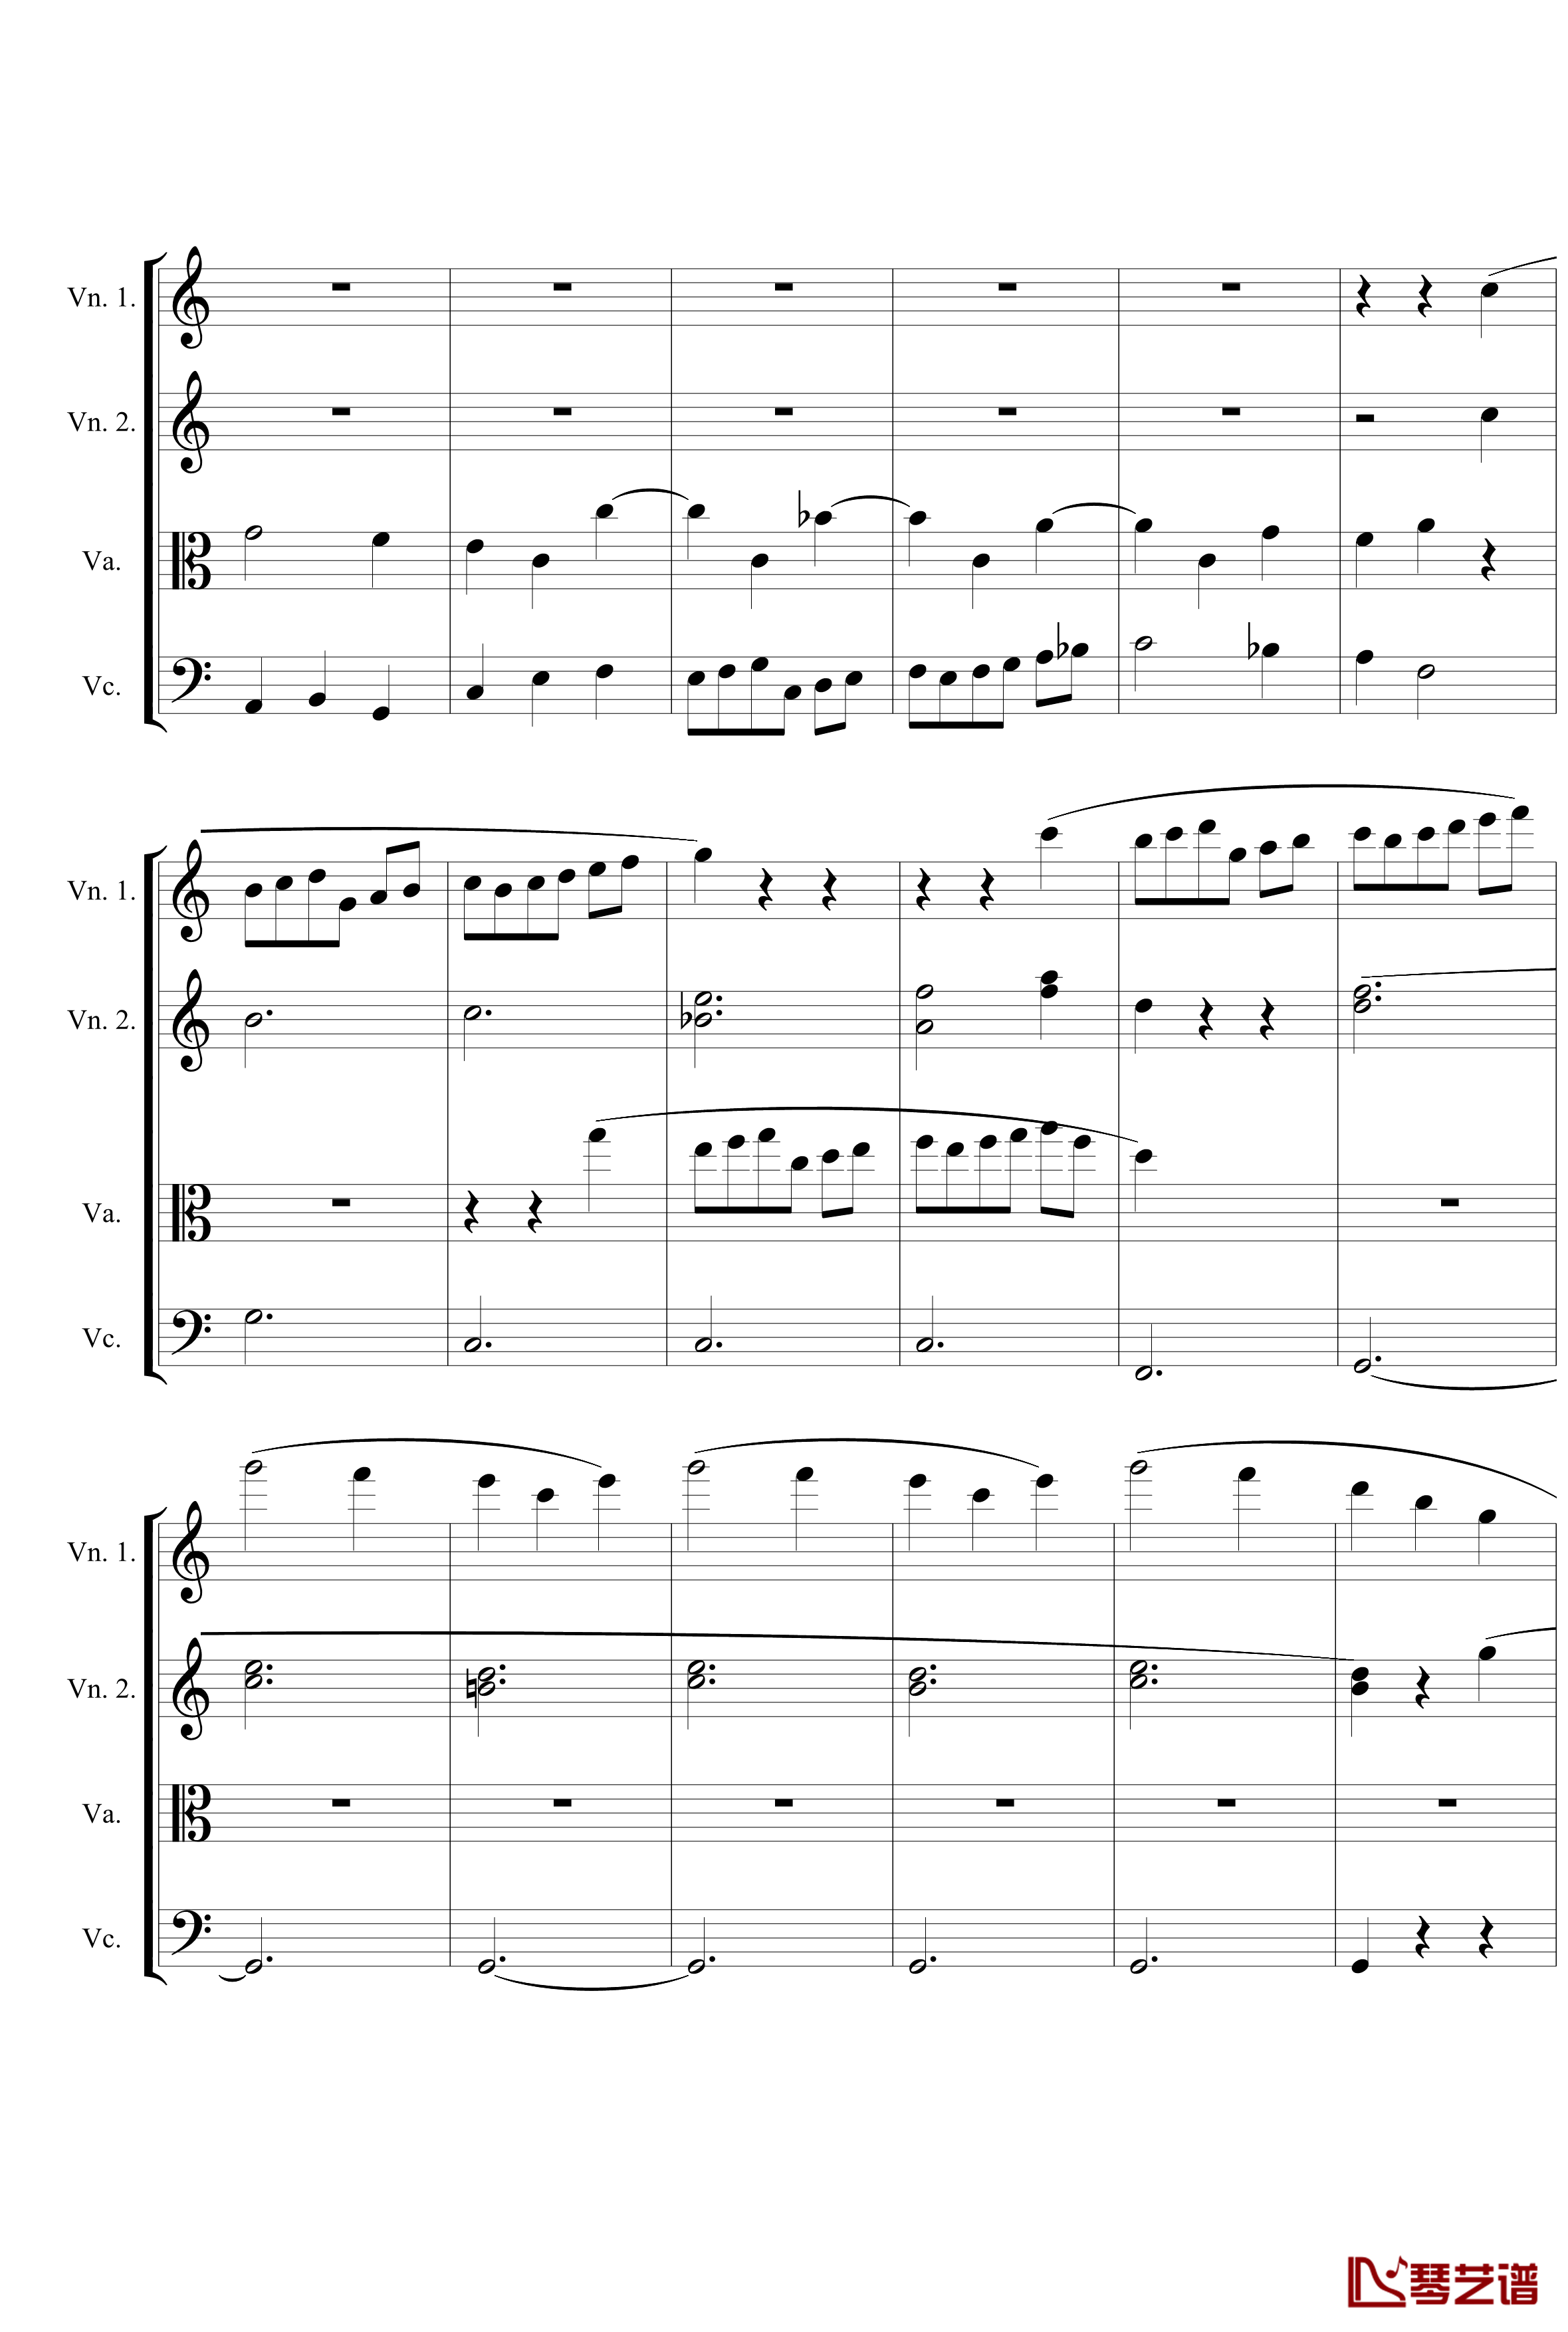 Symphony No.5 in C Minor 3rd钢琴谱-String quartet-贝多芬-beethoven15